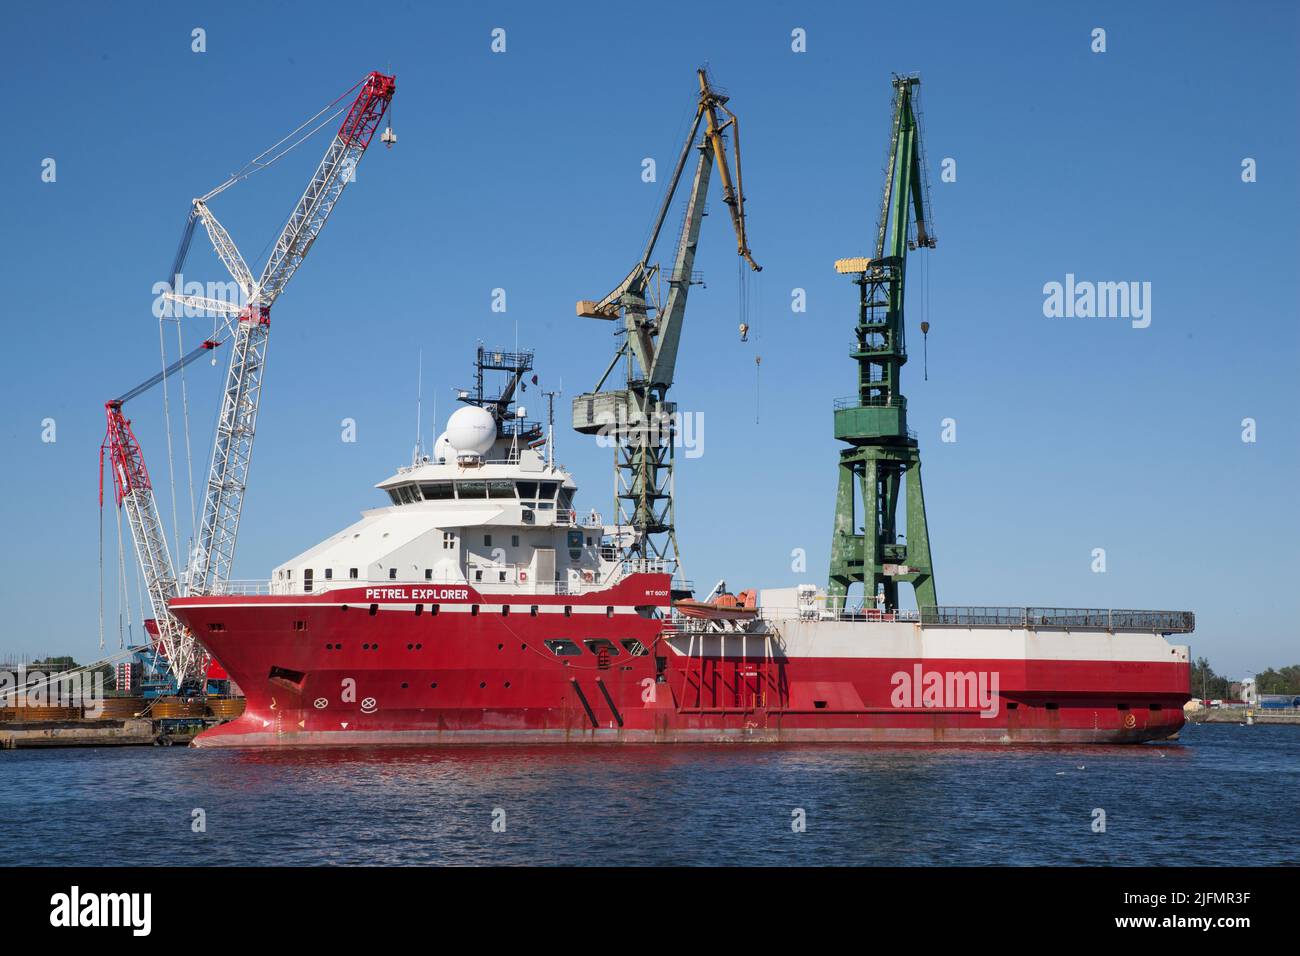 Survey Vessel Petrel Explorer, docked in Gdansk Shipyard, Poland - Stocznia Gdansk, Polska Stock Photo